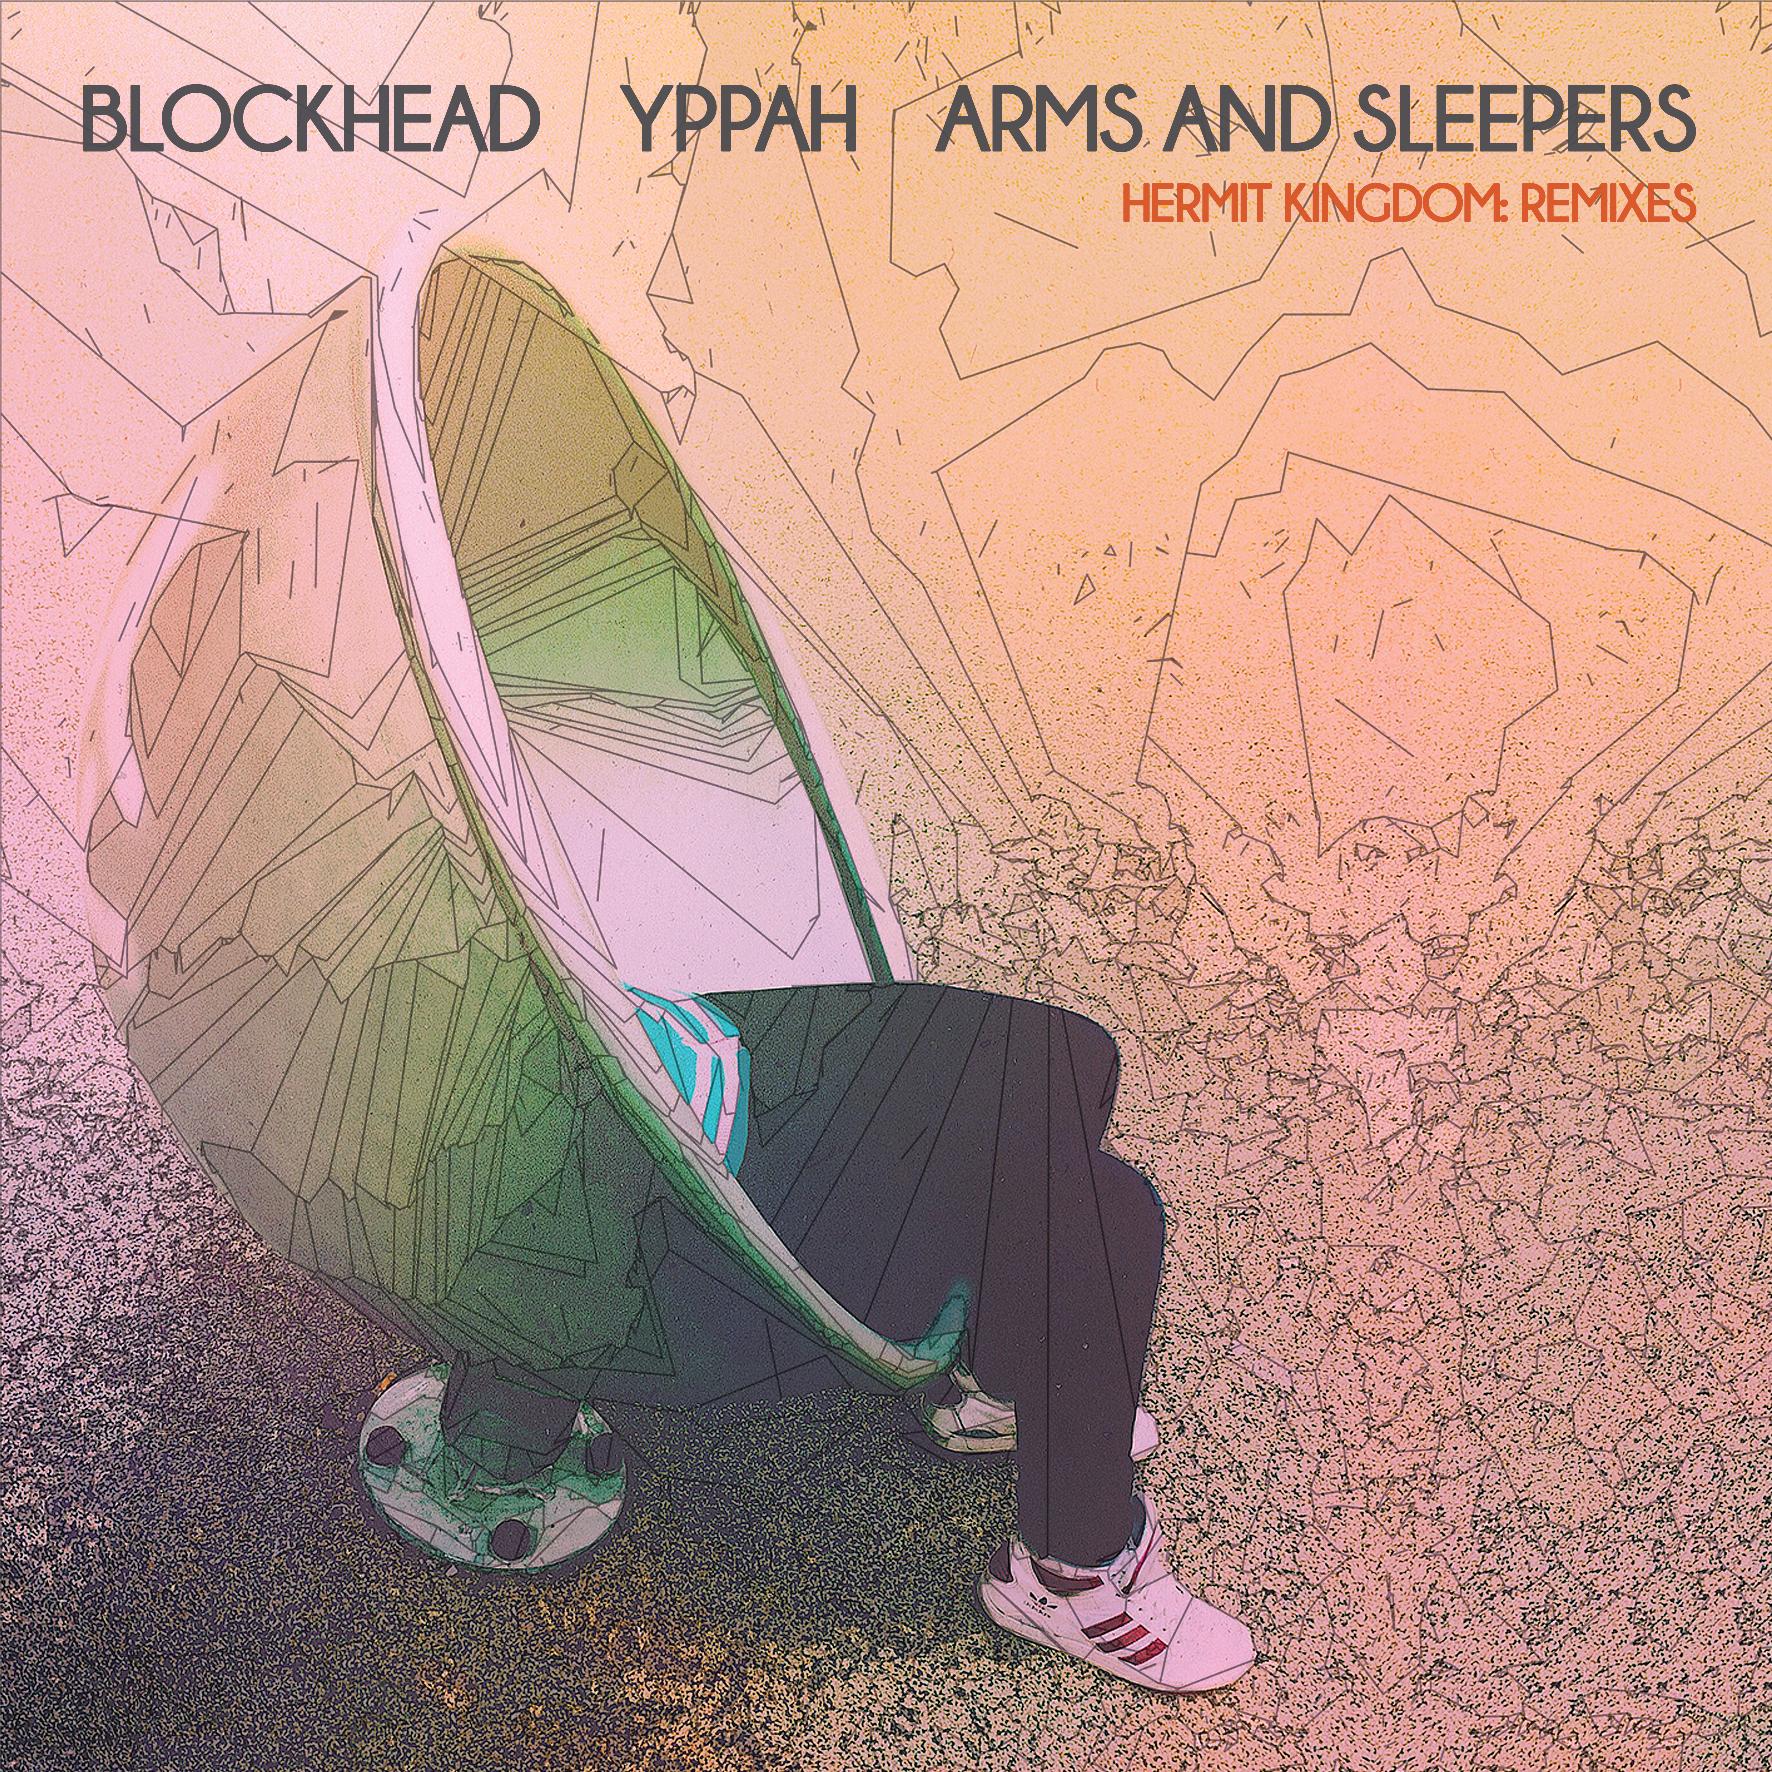 Fall Asleep When I'm Dead (Blockhead Remix)